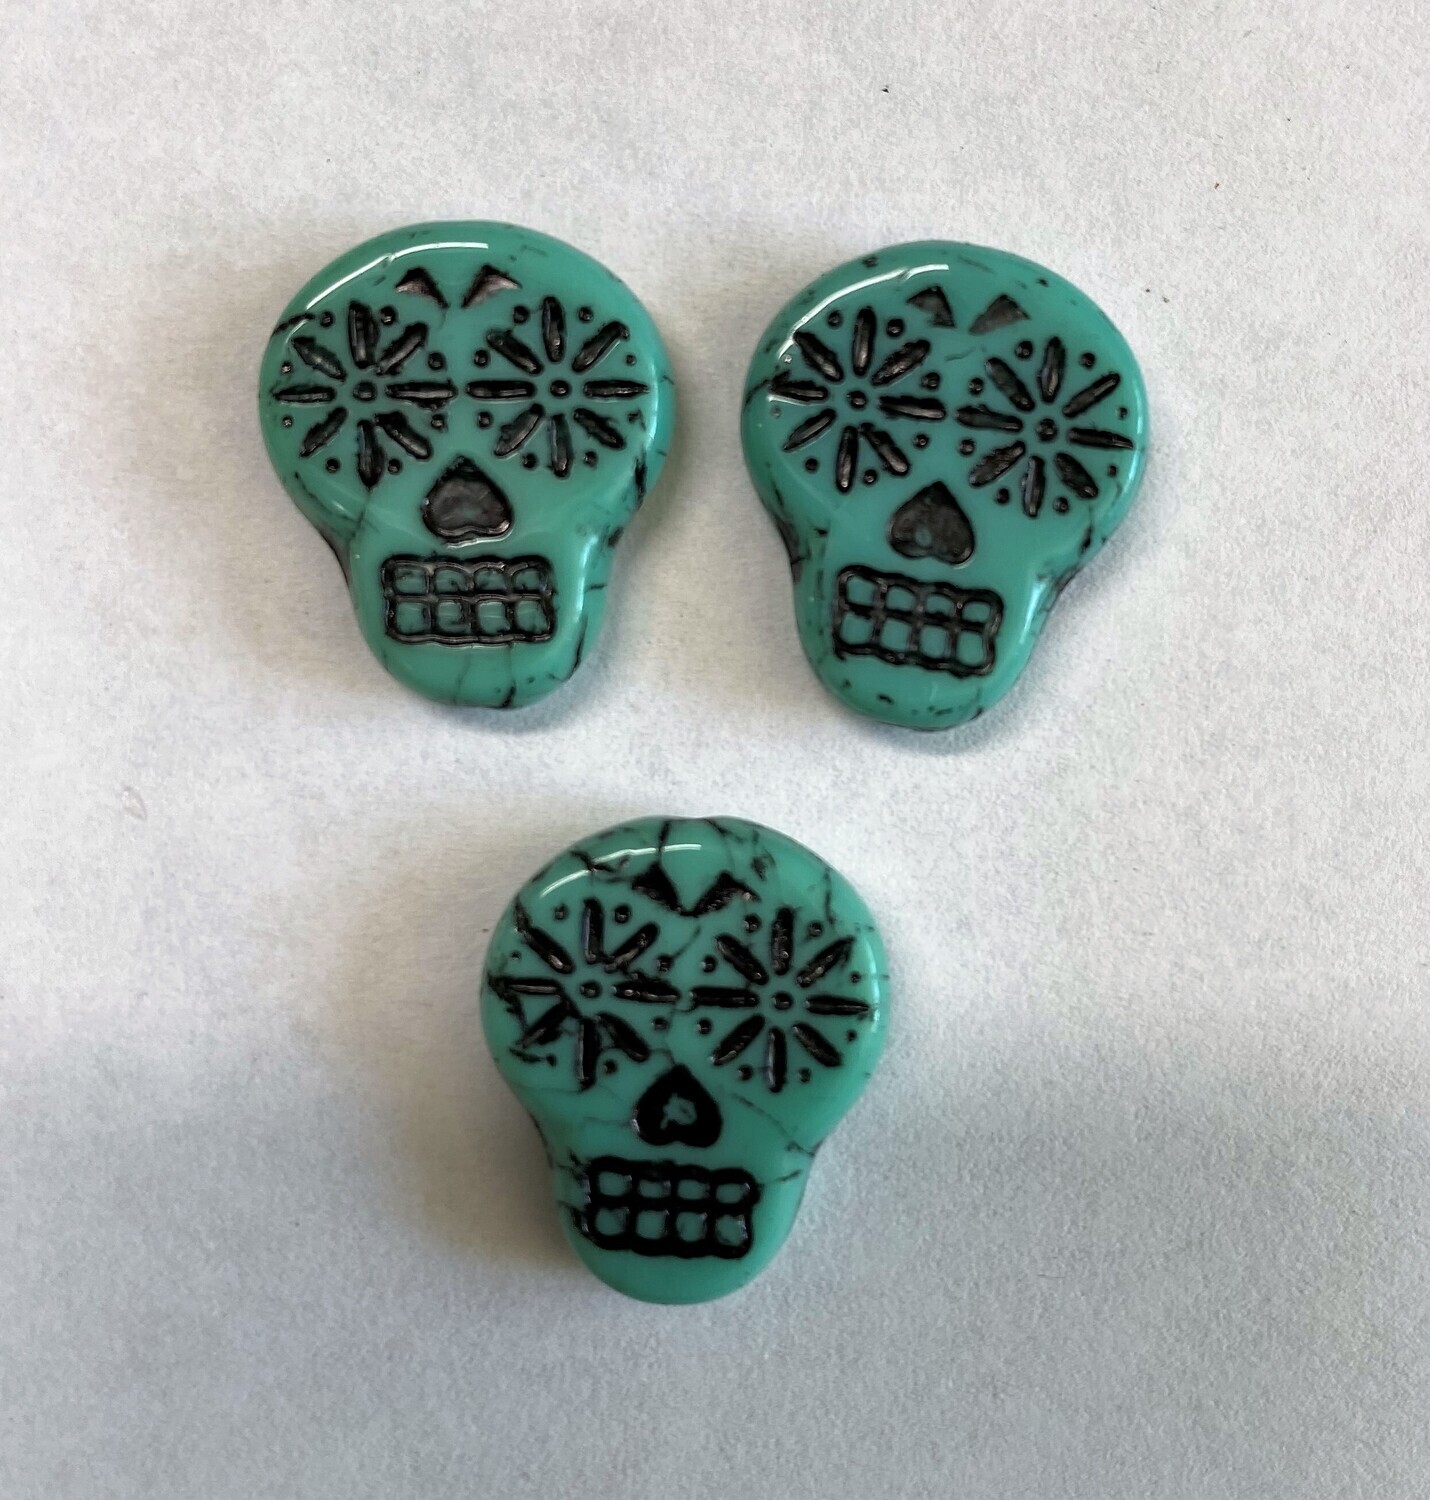 3 Turquoise Sugar Skulls - Czech Glass